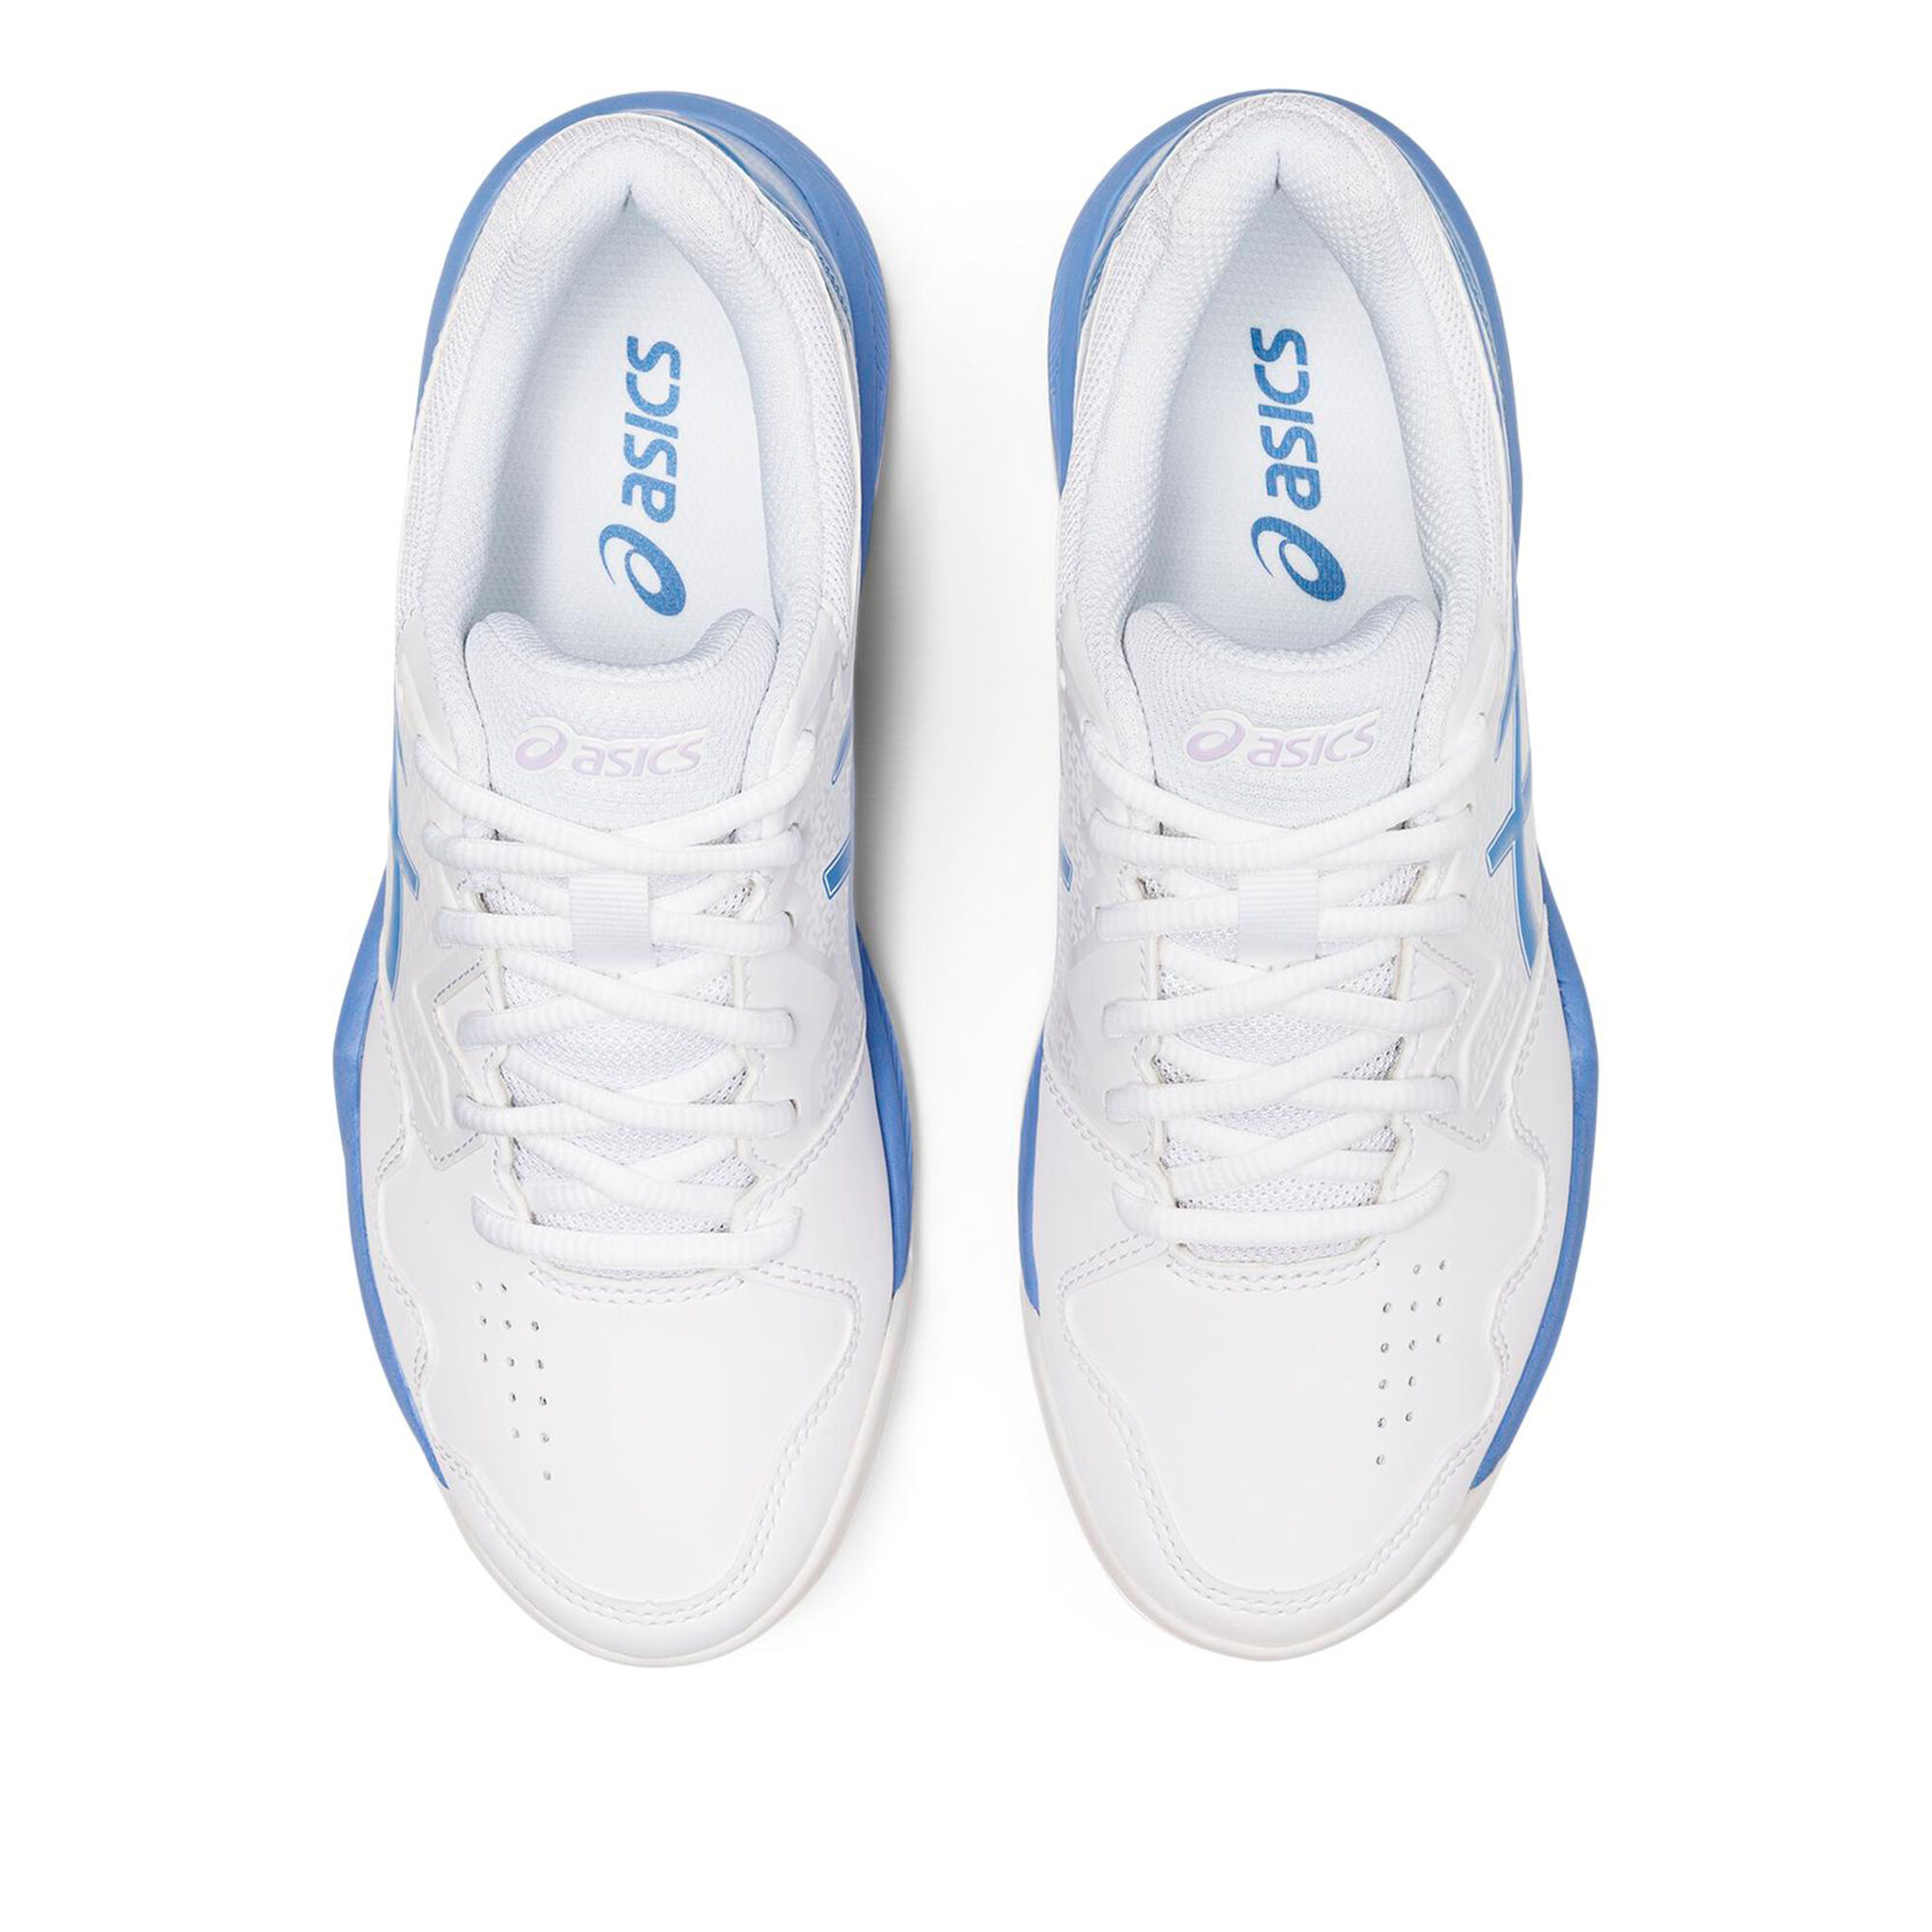 Court online Gel-Dedicate Clay Blue Women 7 White, ASICS | COM Buy Tennis Point Shoe